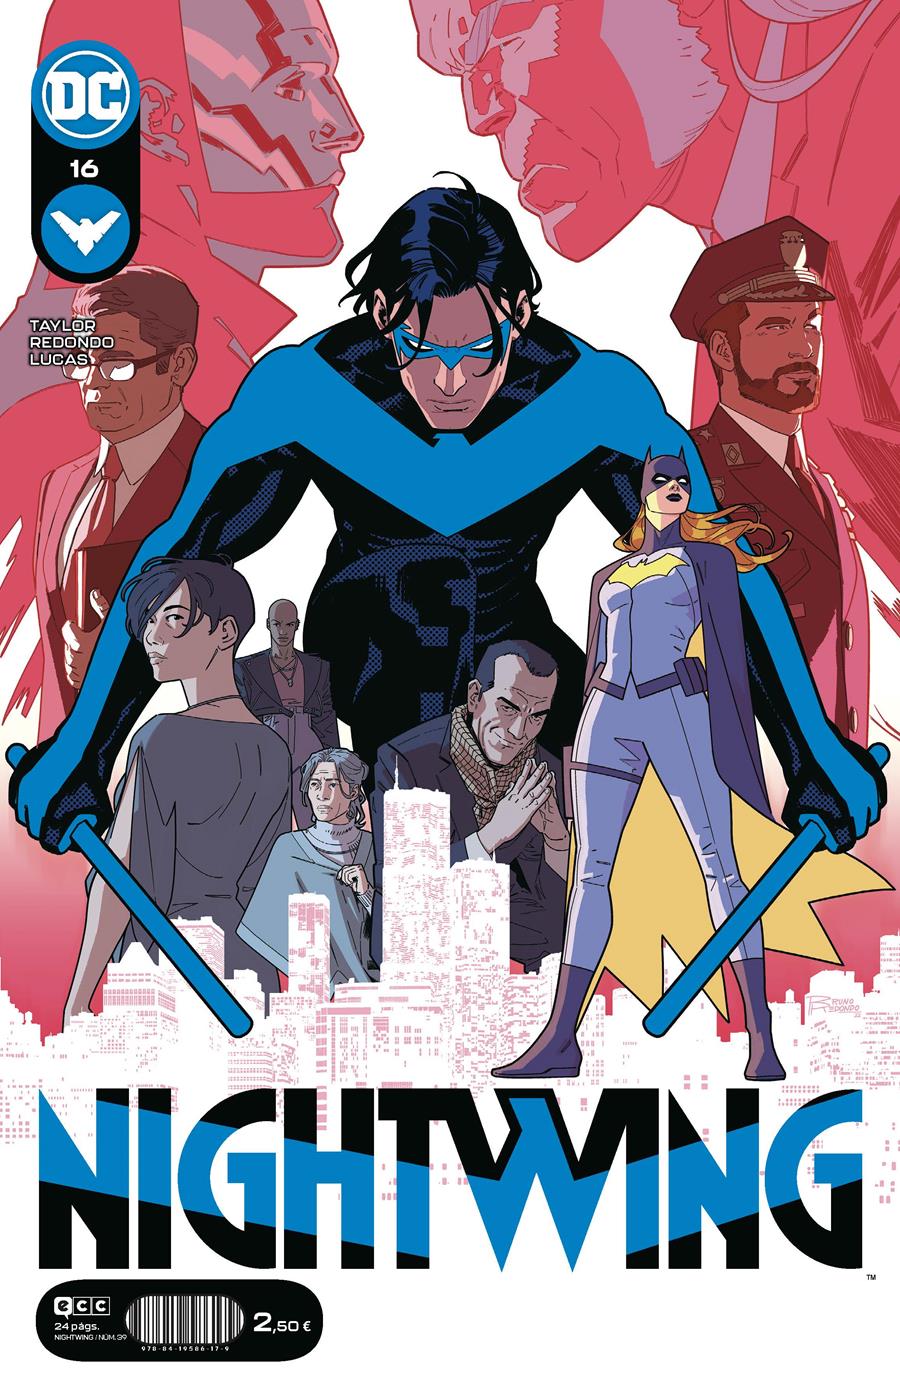 Nightwing núm. 16 | N0123-ECC20 | Bruno Redondo / Tom Taylor | Terra de Còmic - Tu tienda de cómics online especializada en cómics, manga y merchandising